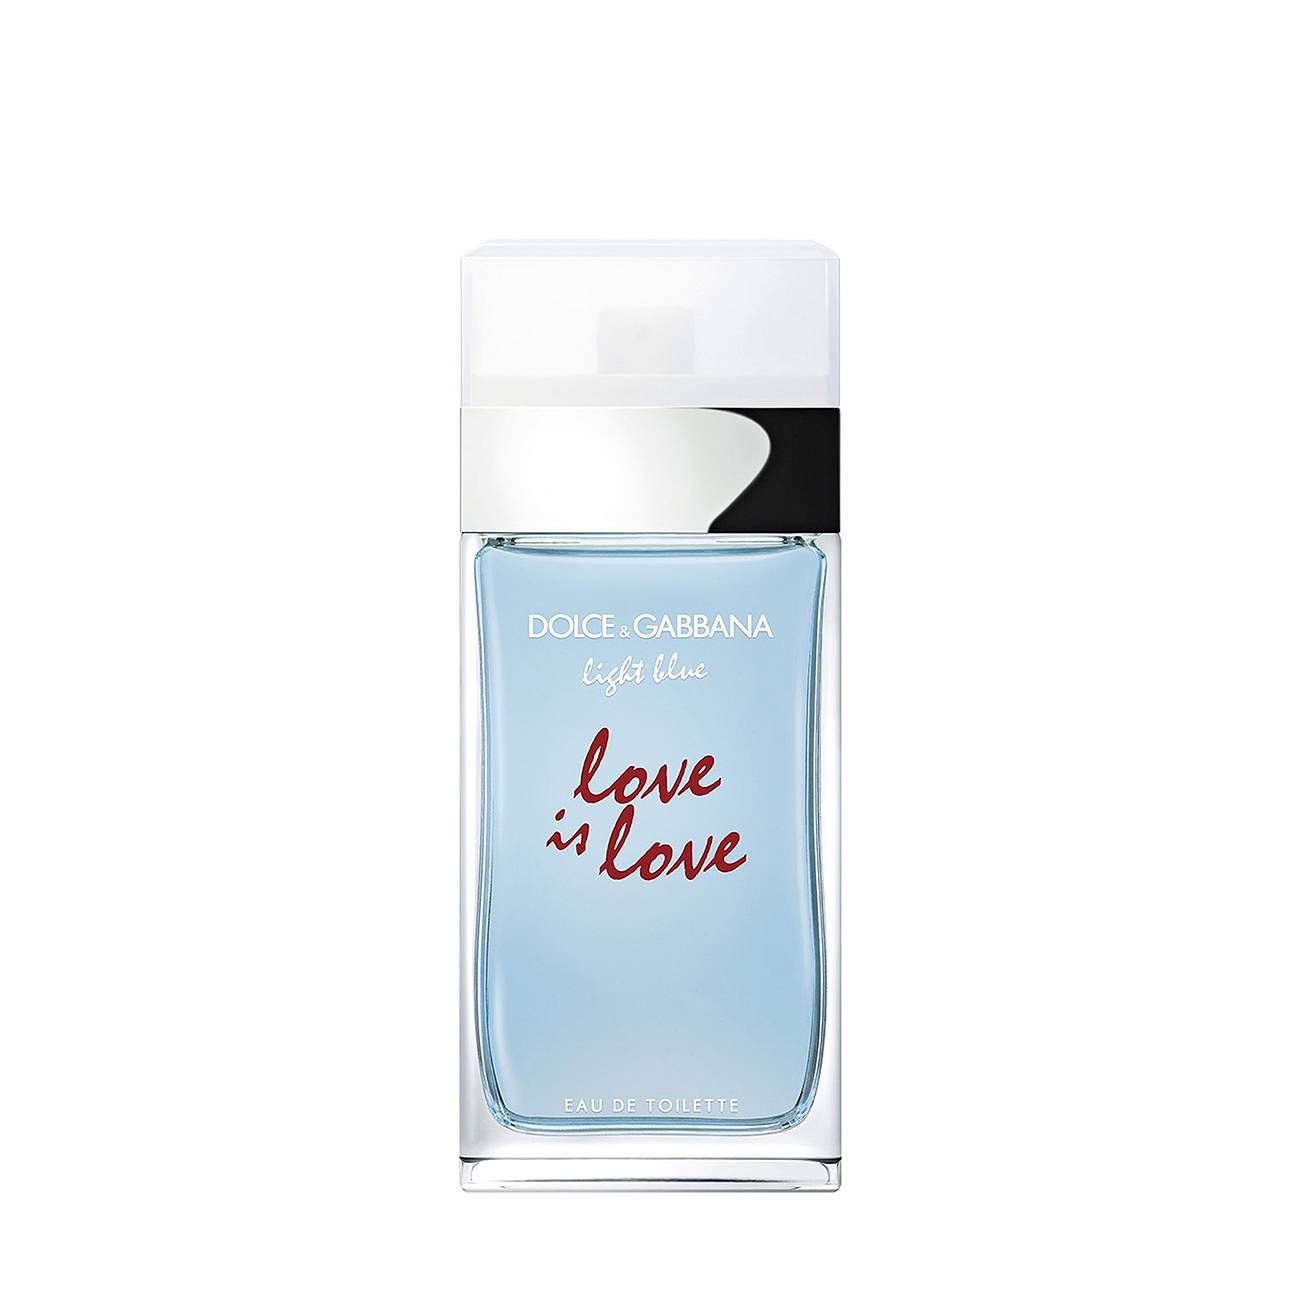 LIGHT BLUE LOVE IS LOVE 100ml bestvalue.eu